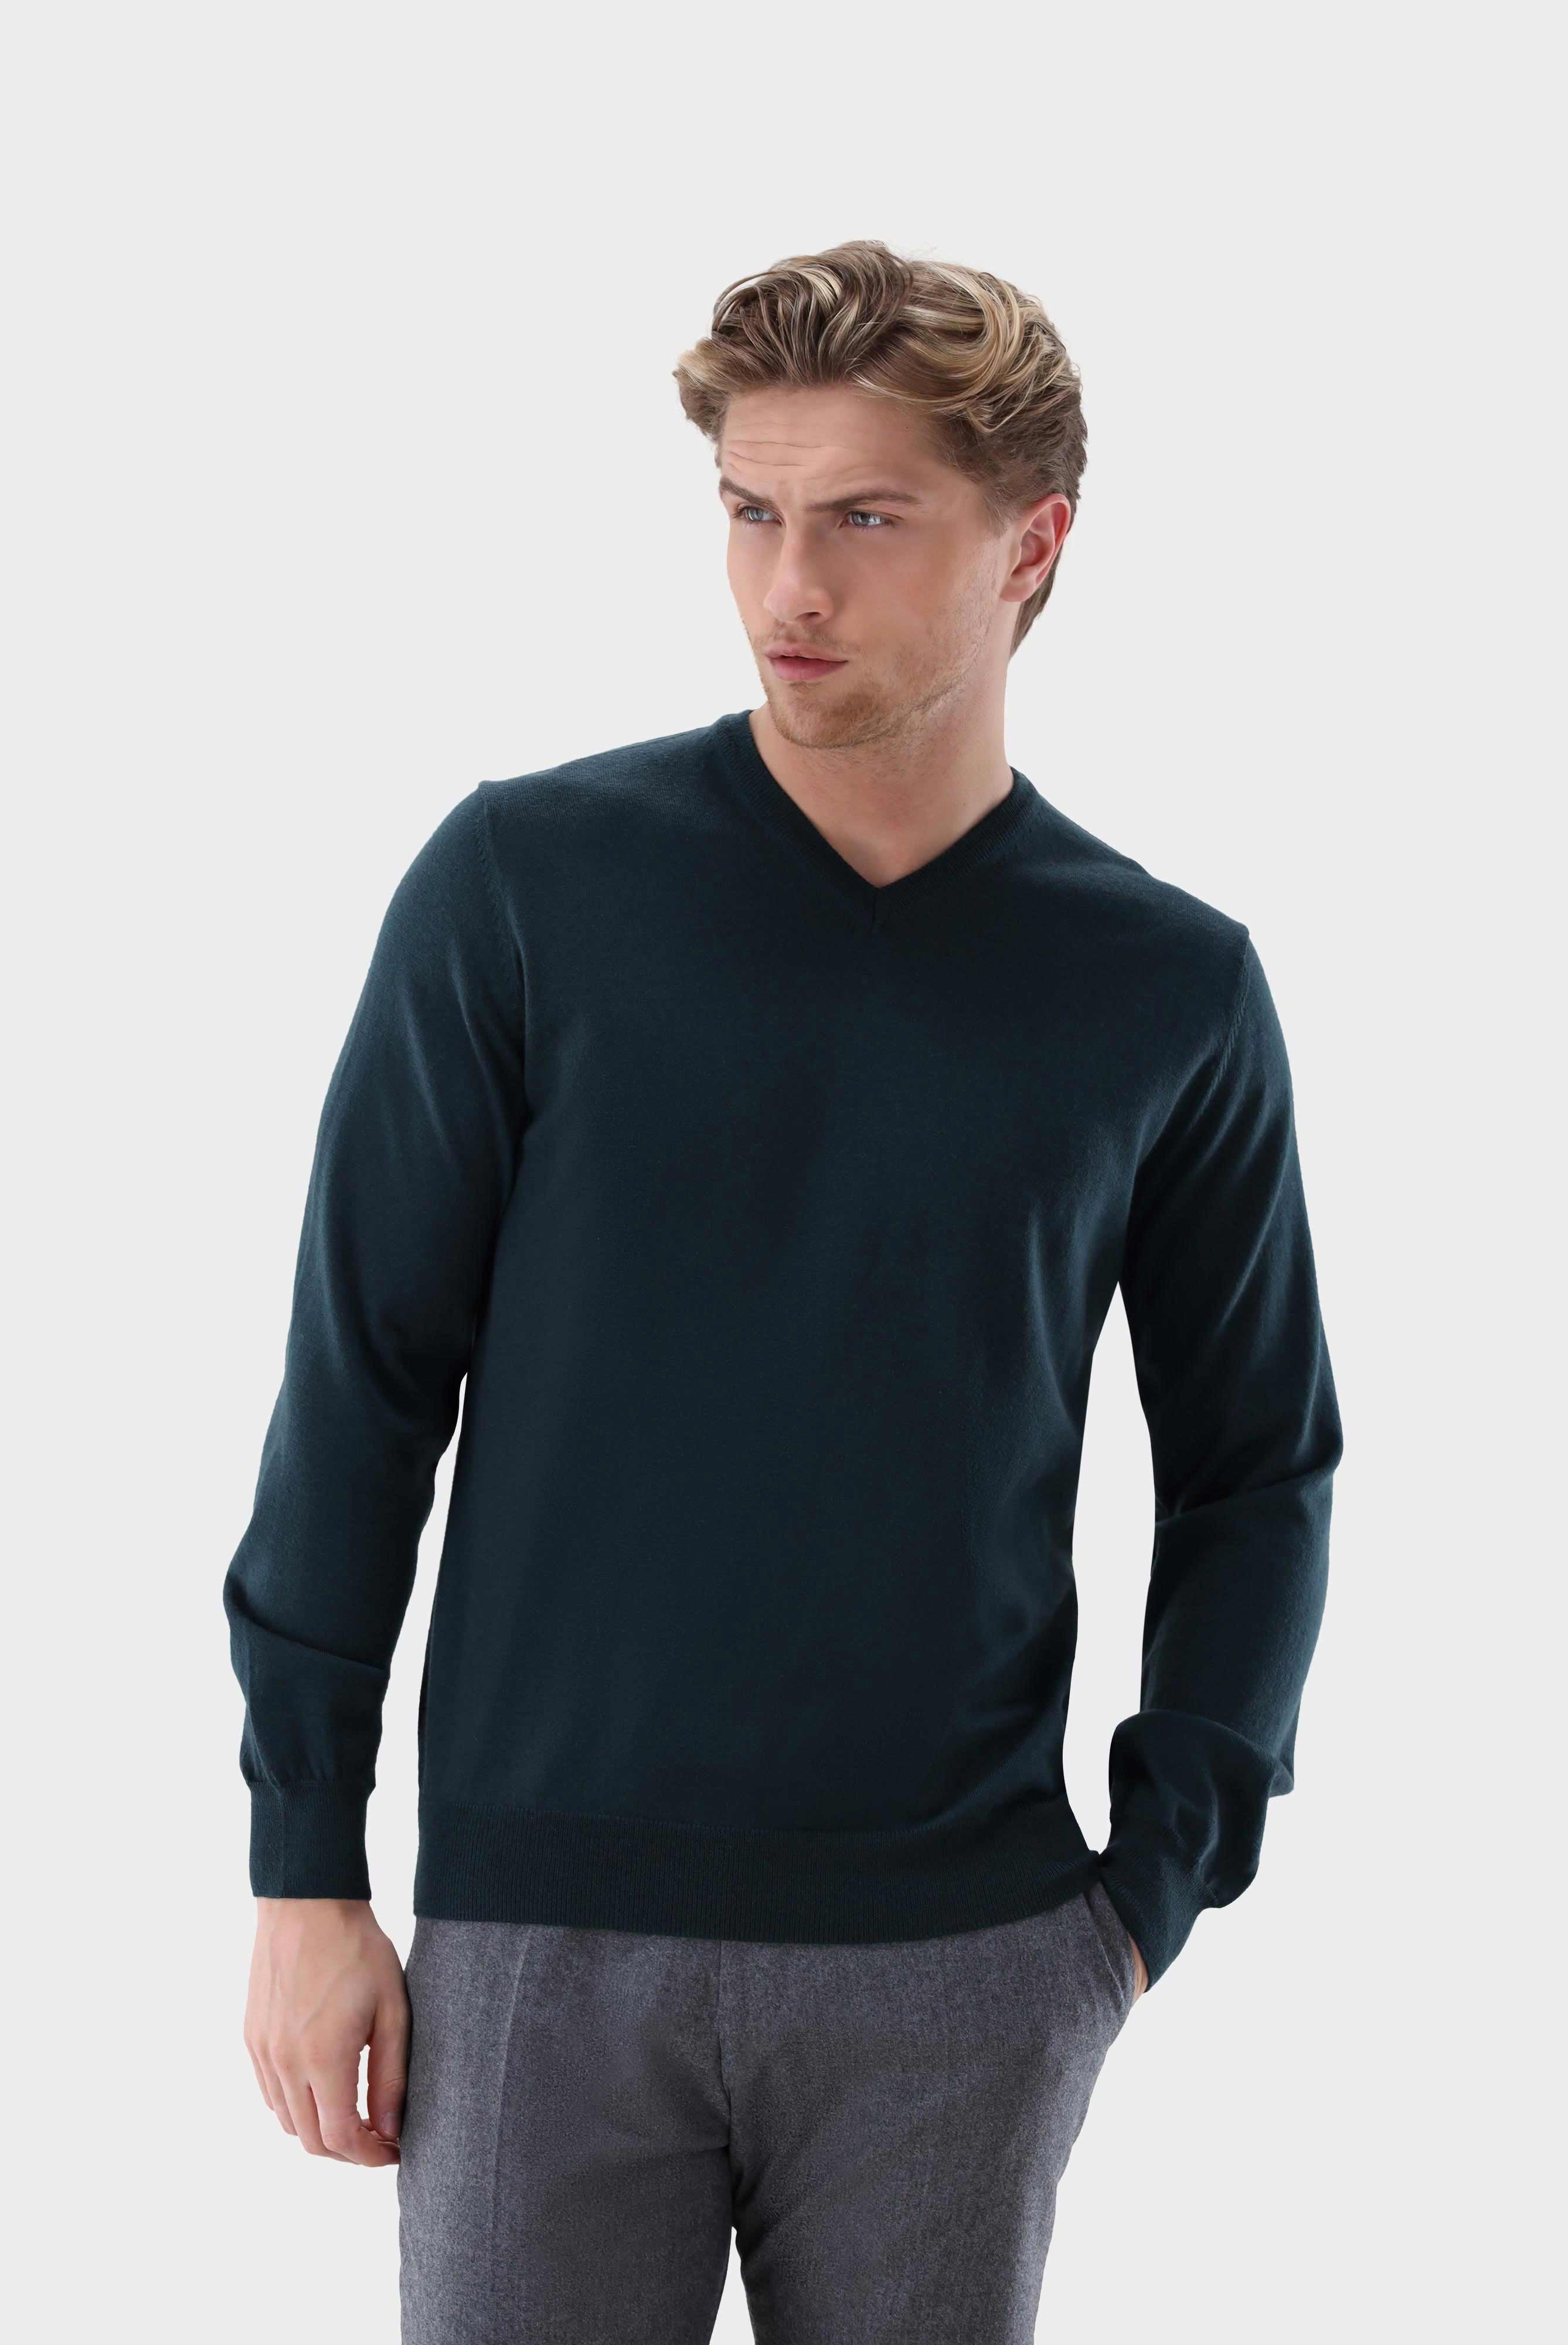 Sweaters & Cardigans+V-Neck in Mercerized Merino+82.8618..S00176.980.M